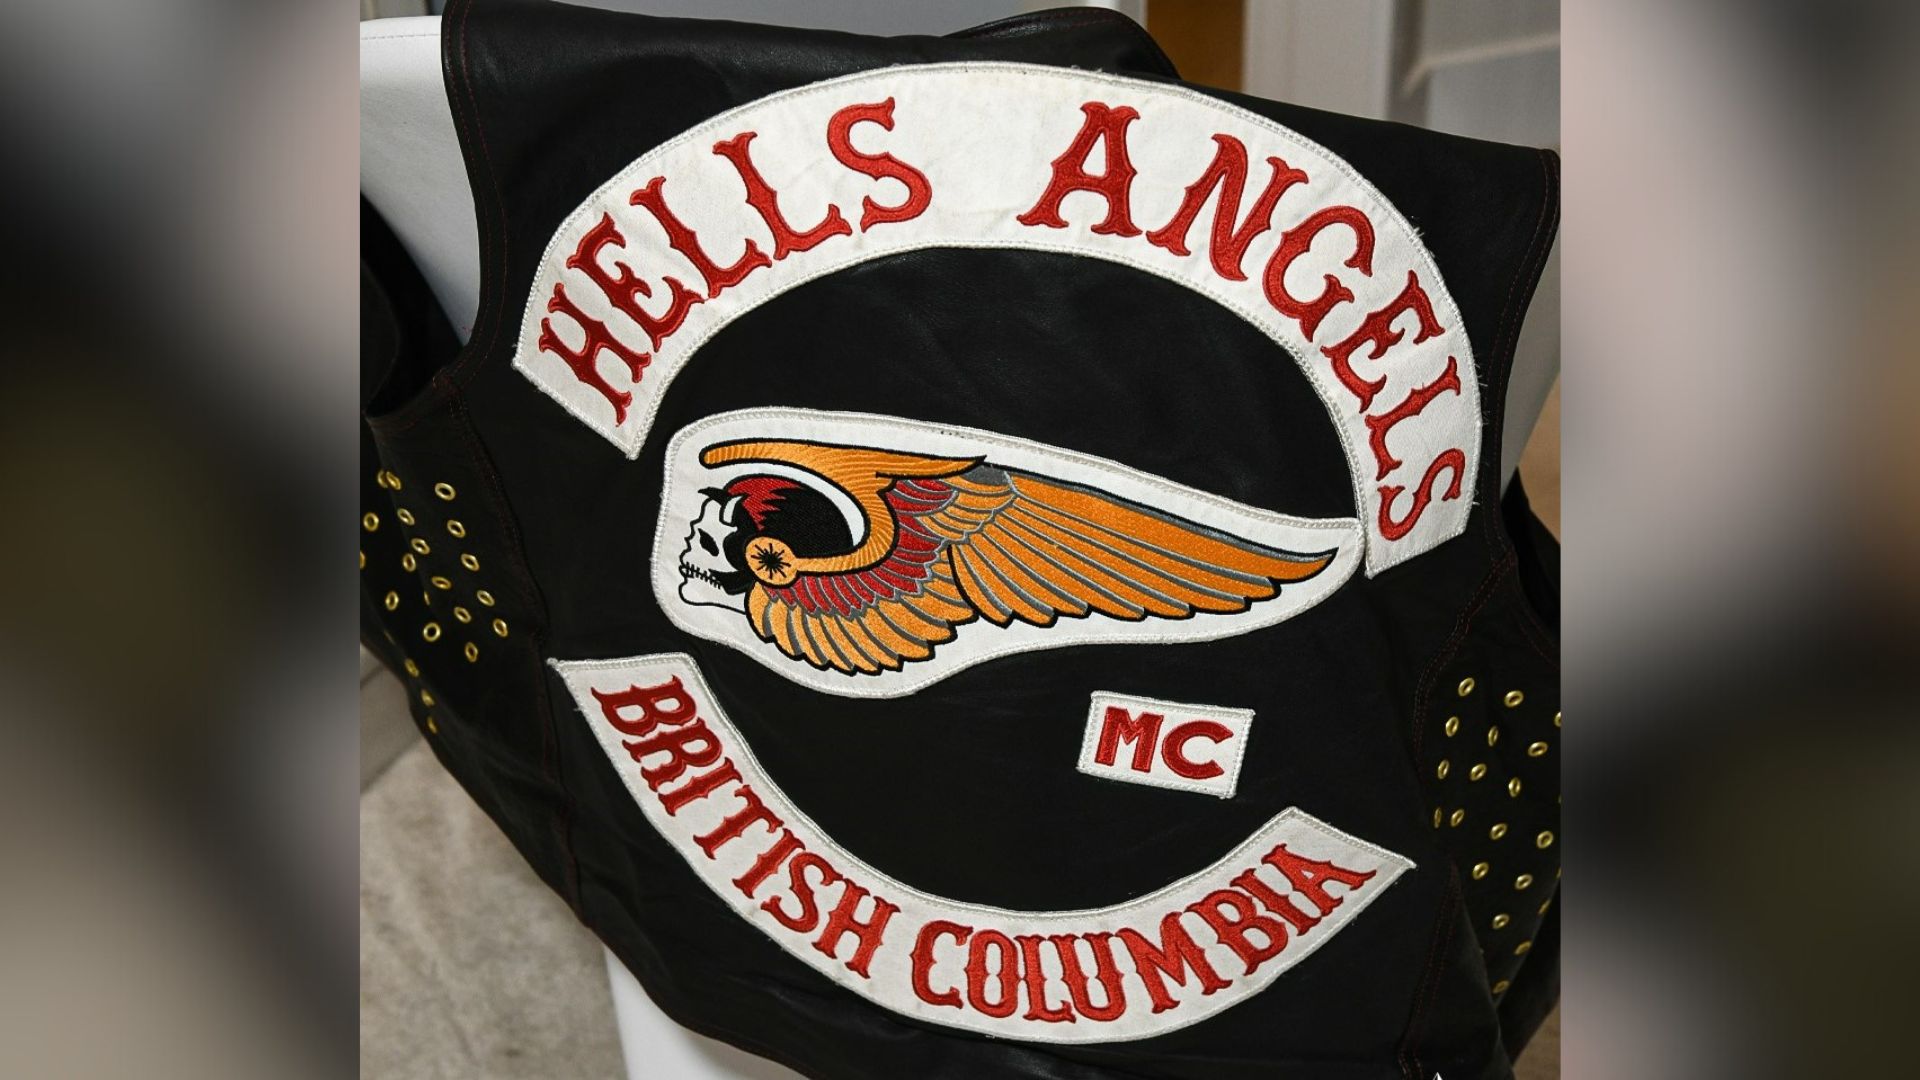 ALERT members back in Alberta after Hell's Angels surveillance in B.C.